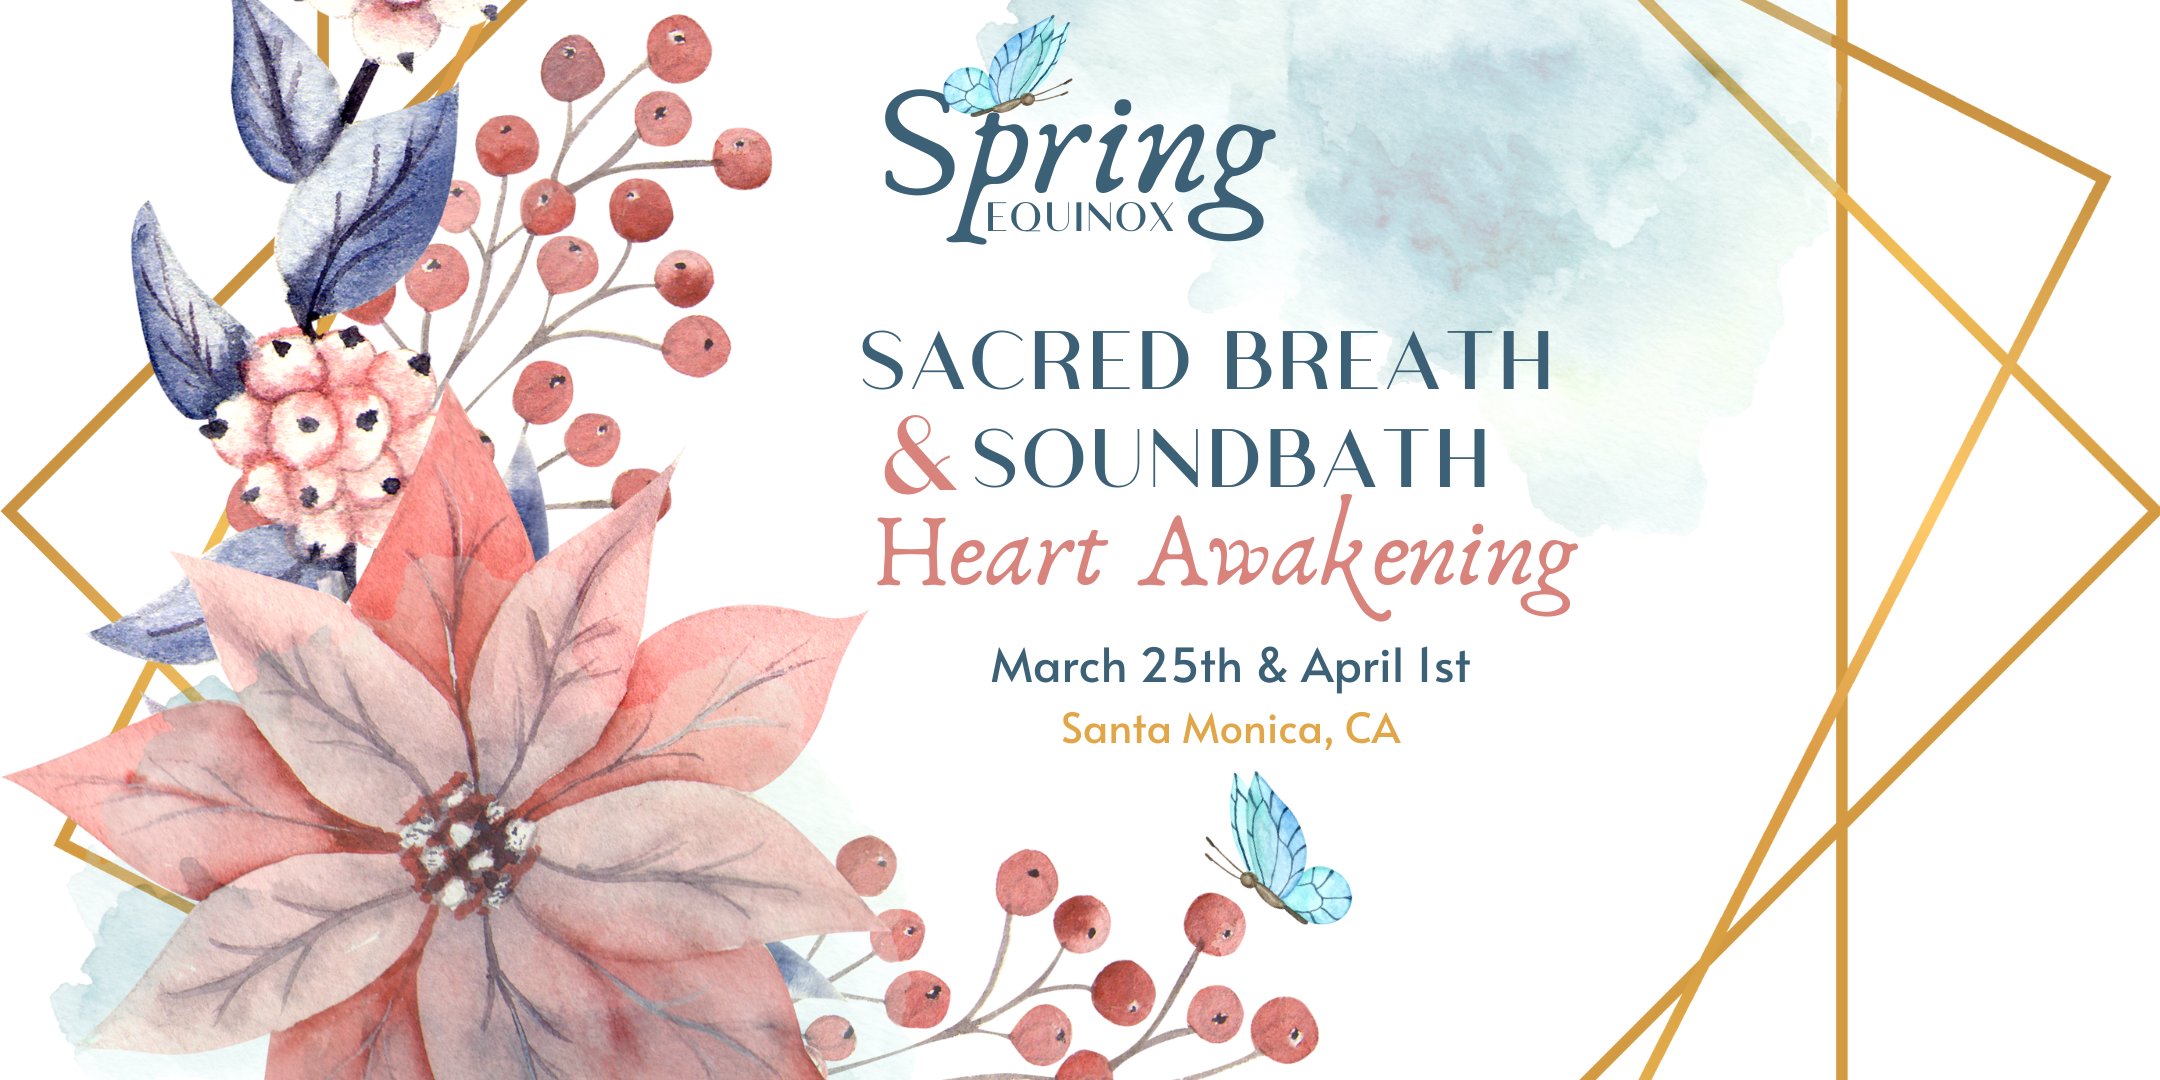 Spring Equinox Sacred Breath & Soundbath Heart Awakening